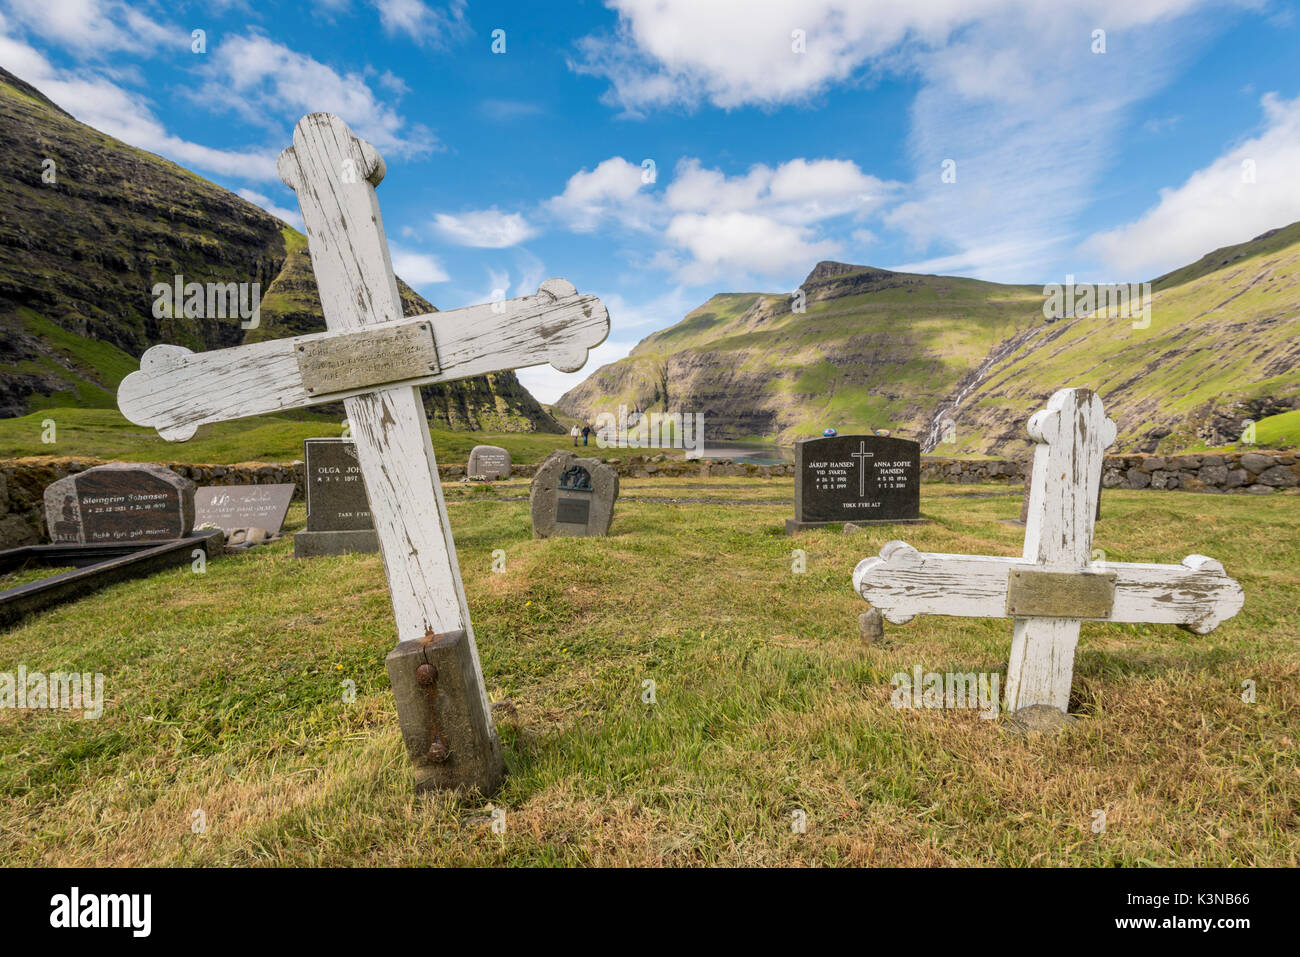 Saksun, Stremnoy island, Faroe Islands, Denmark. Old graves in the village's graveyard. Stock Photo